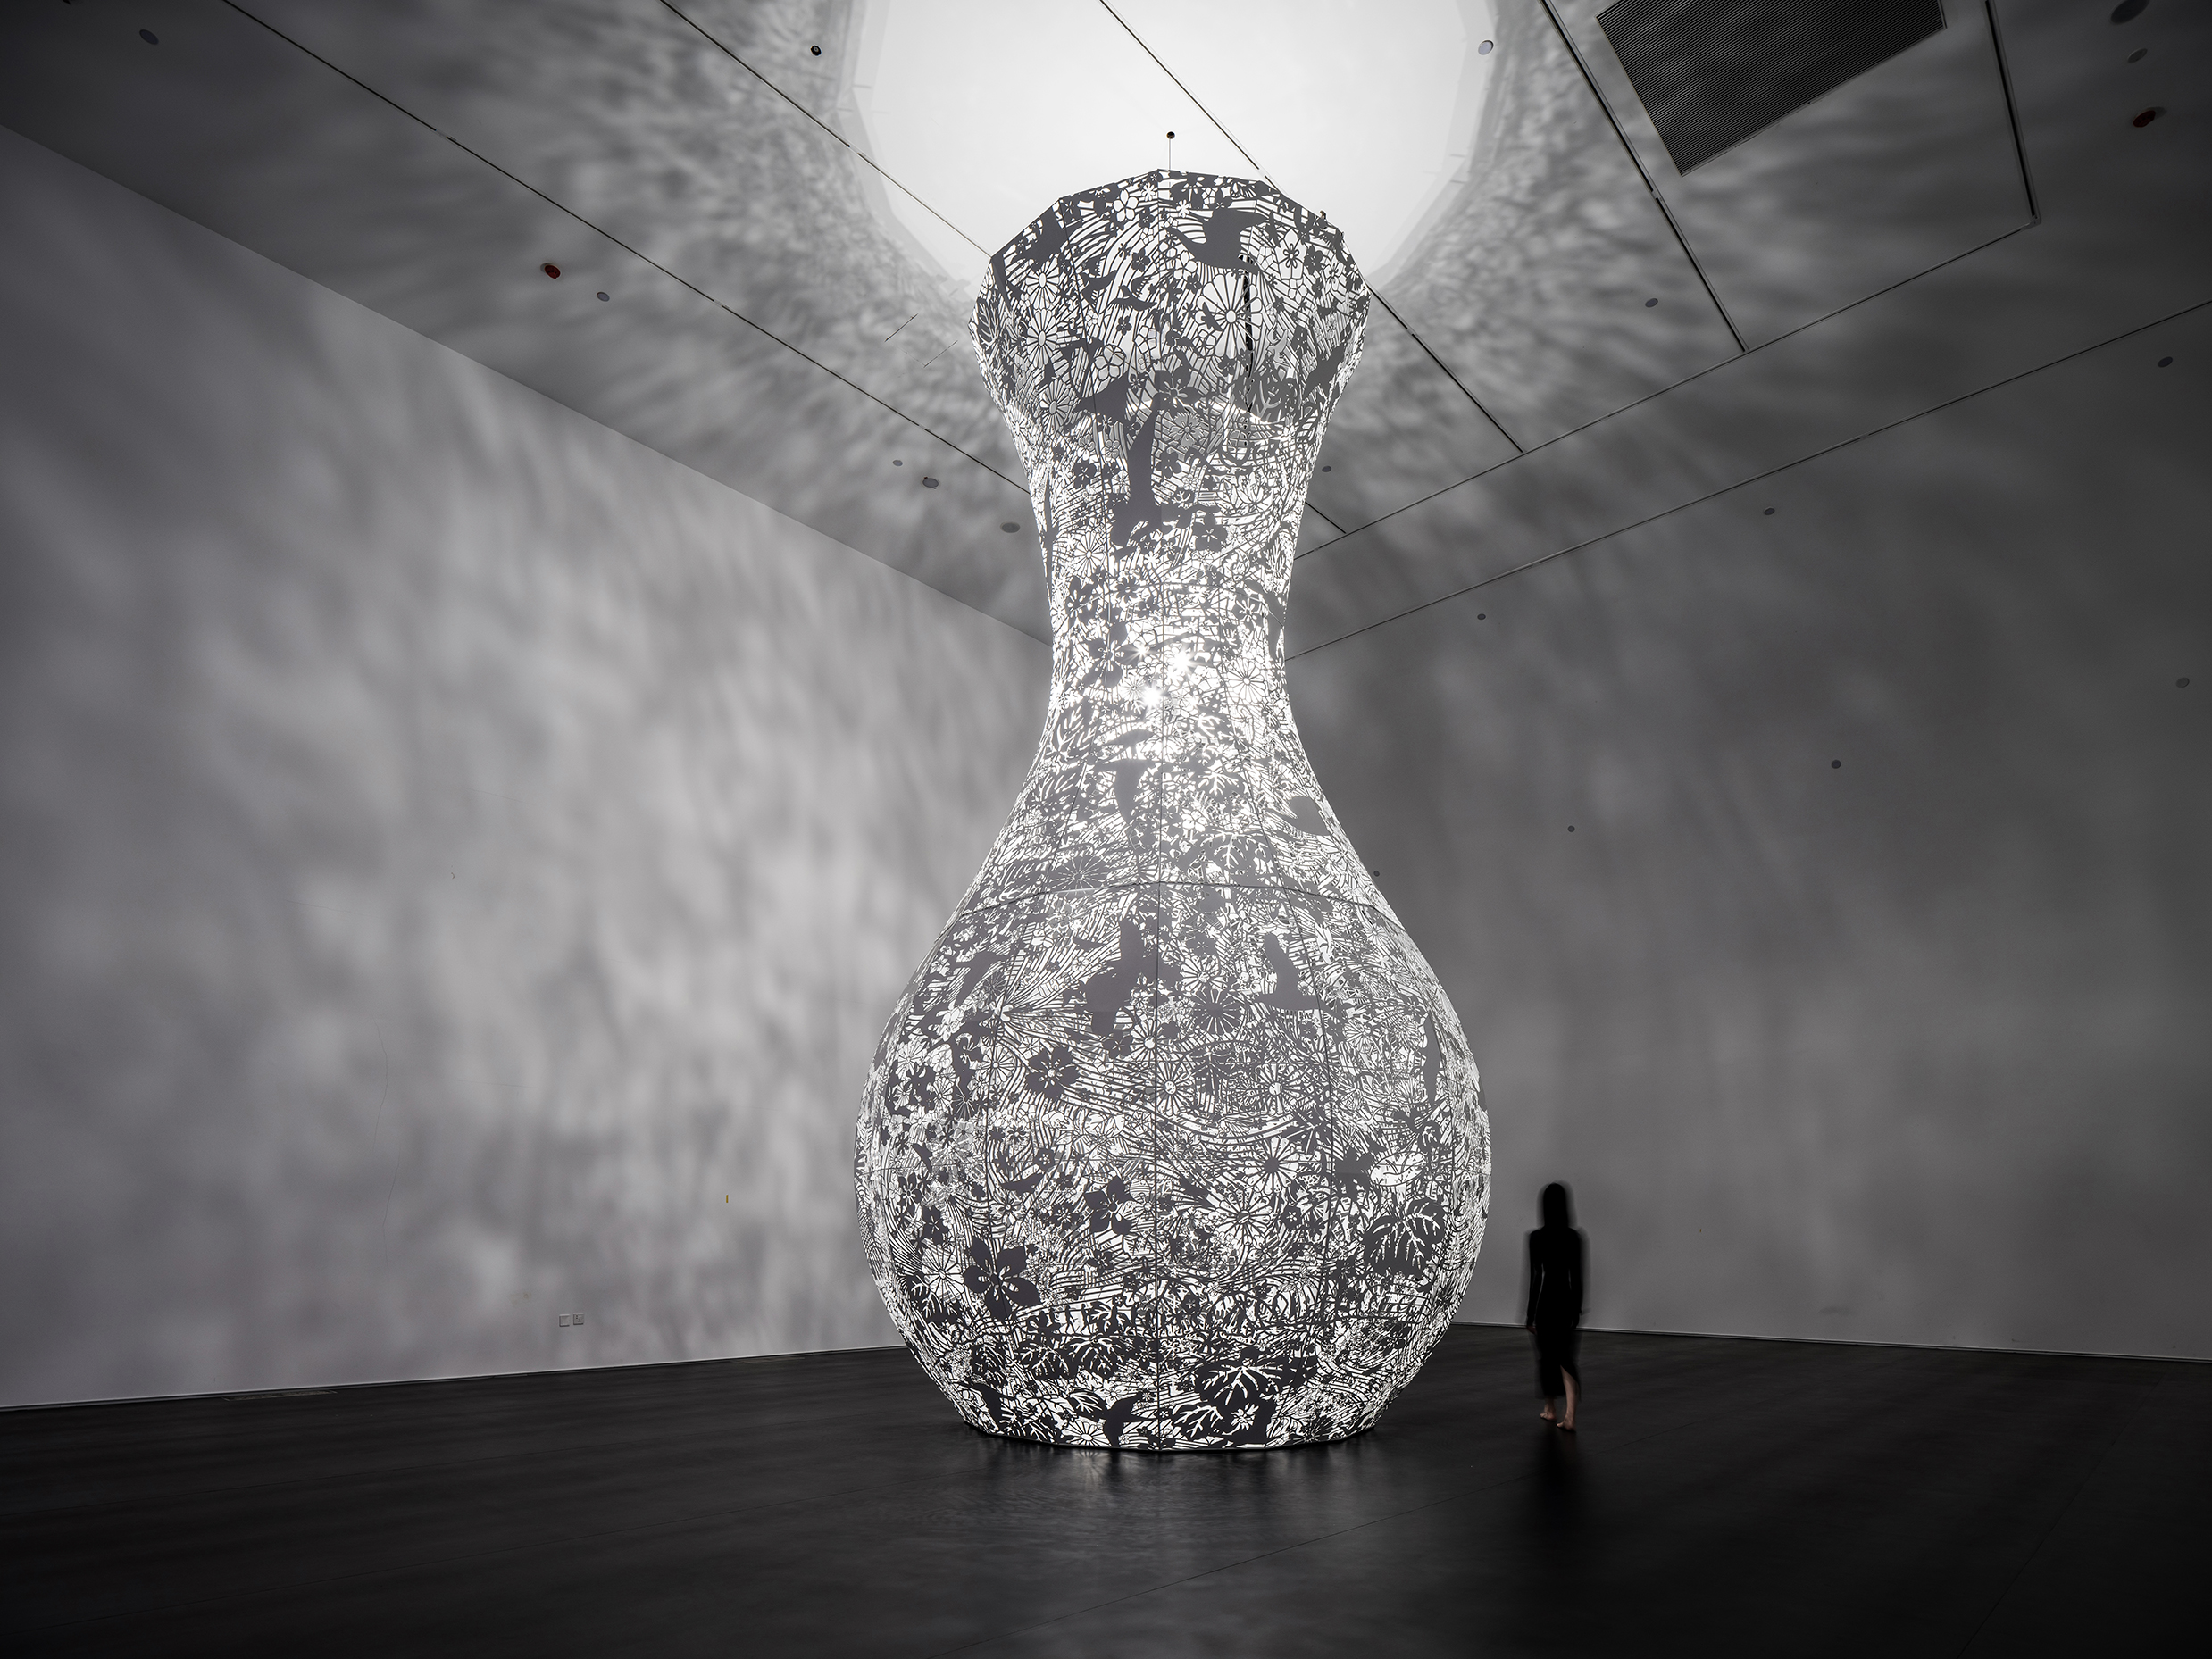 ArtAsiaPacific: Shinji Ohmaki's “The Depth of Light” at A4 Art 